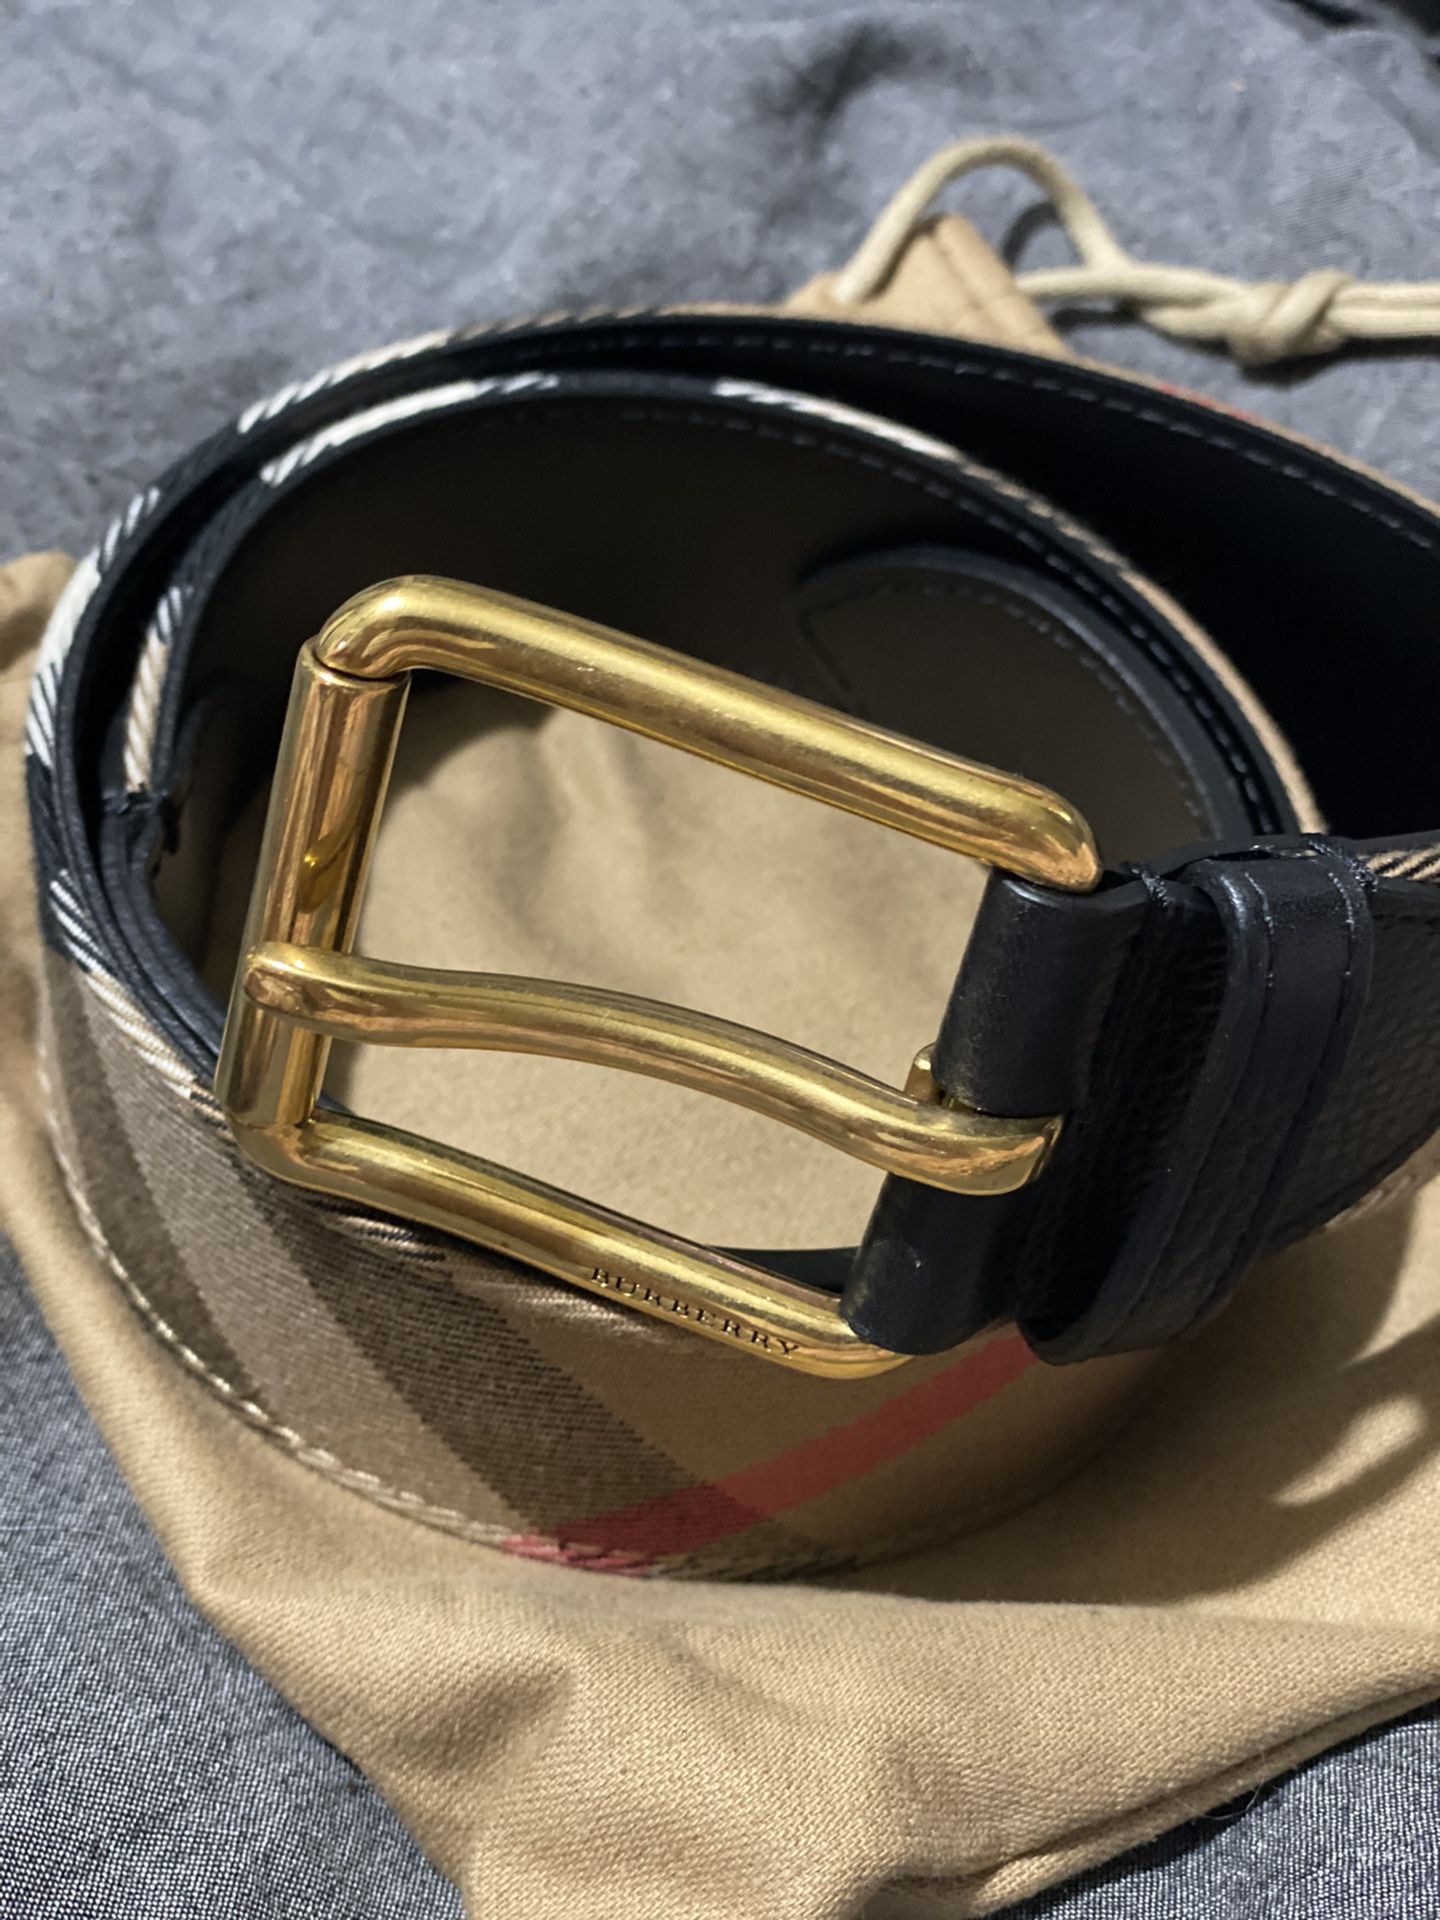 Men’s Gold Burberry Belt Sz 28-34 for Sale in Norcross, GA - OfferUp